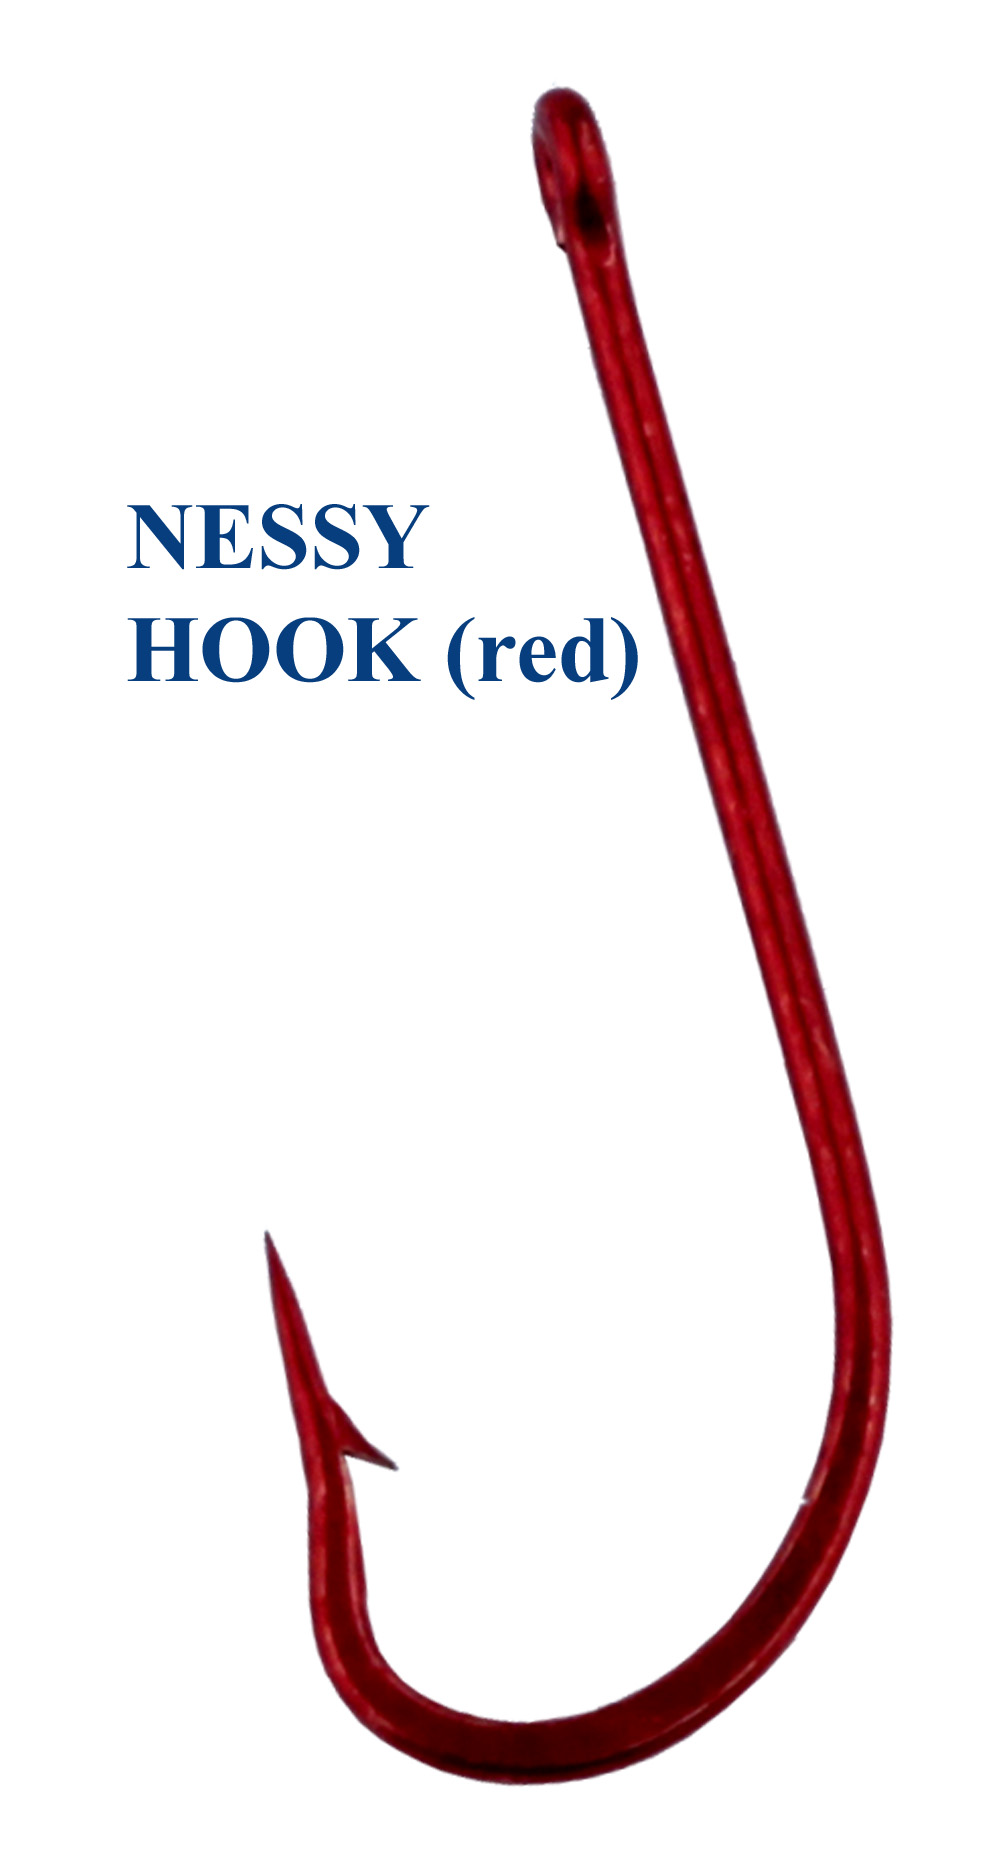 NESSY HOOK (red)